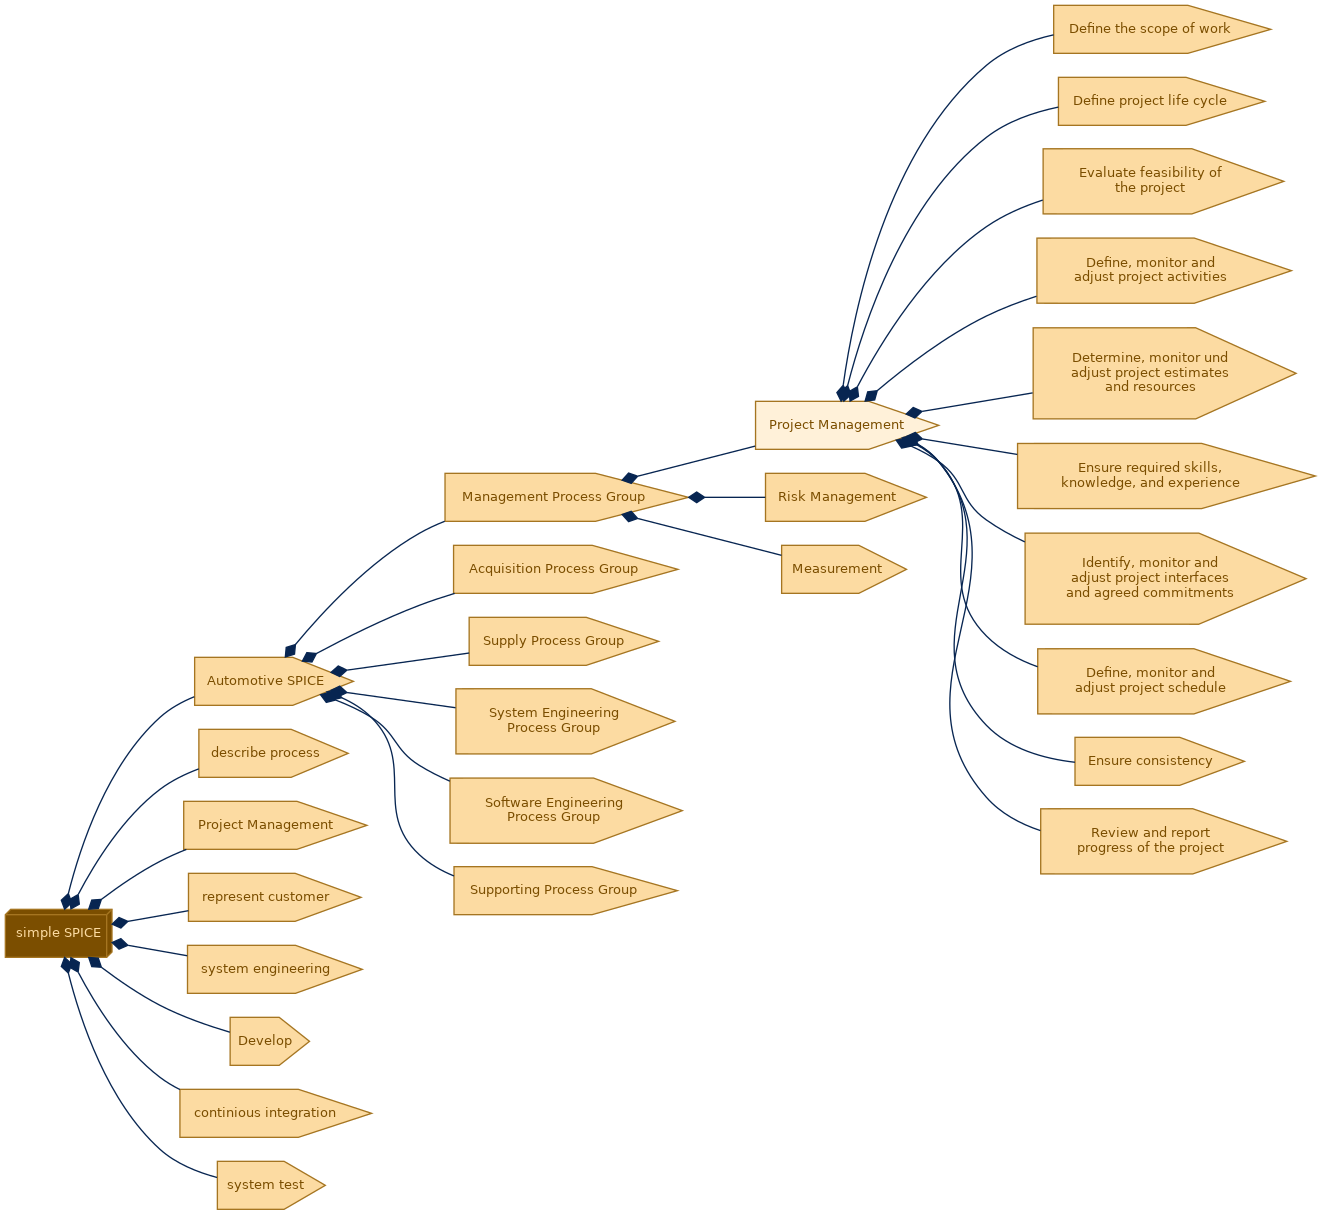 spem diagram of the activity breakdown: Project Management